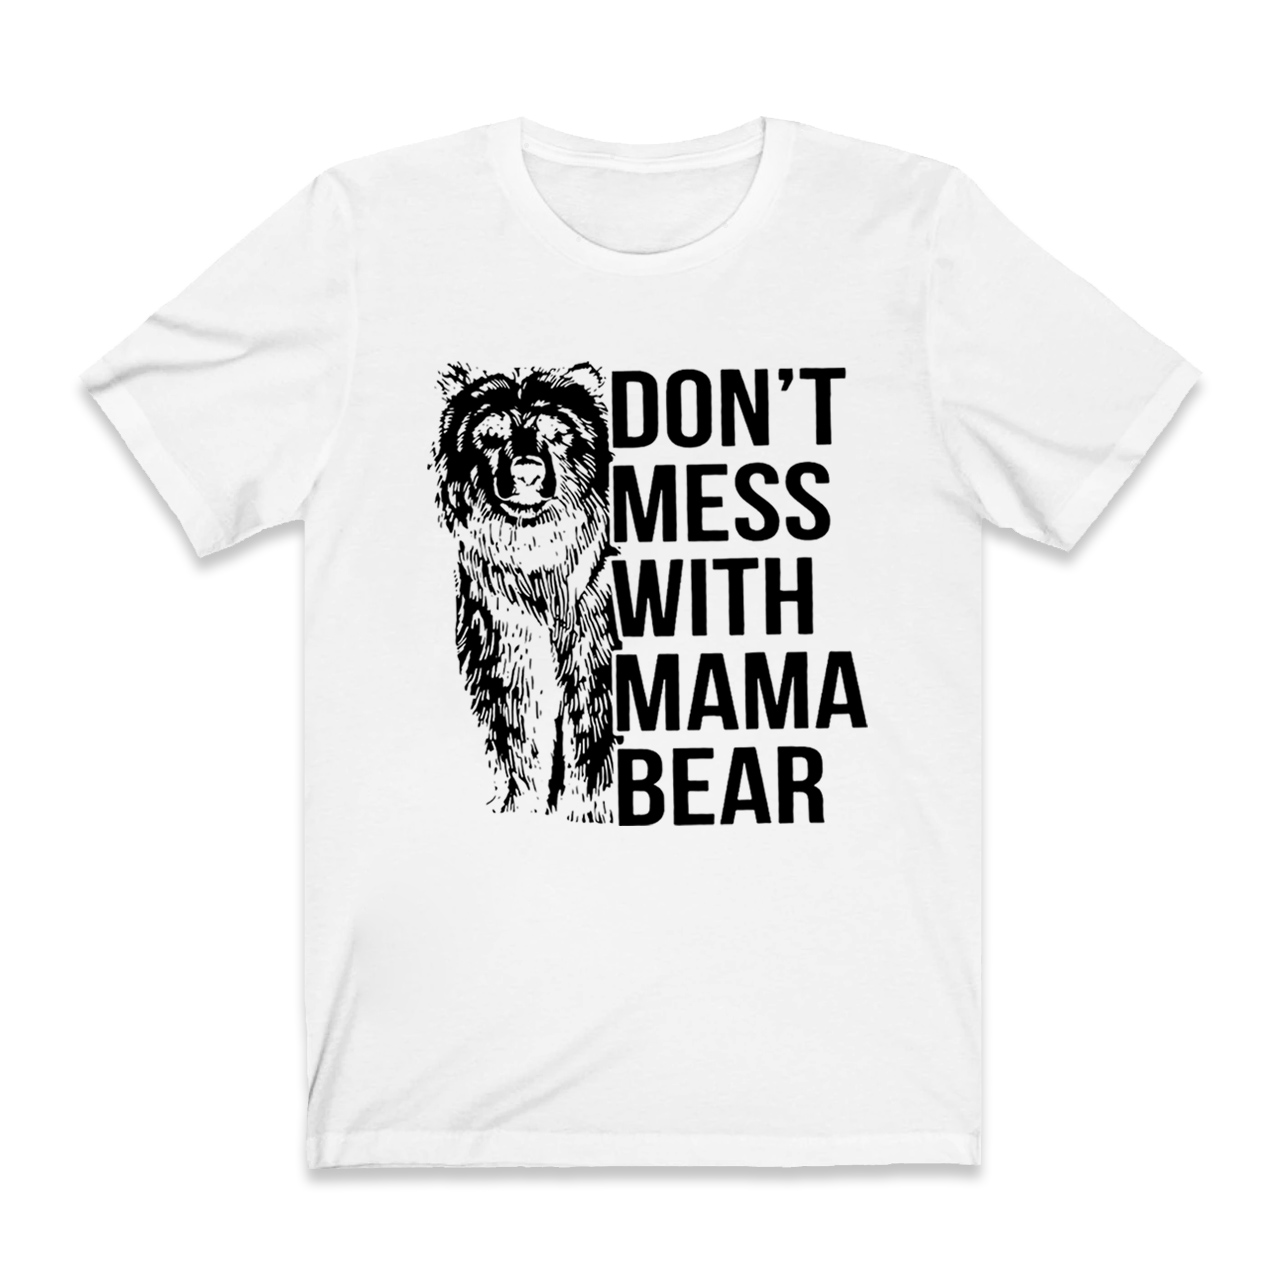 DON'T MESS WITH MAMA BEAR Funny Shirt